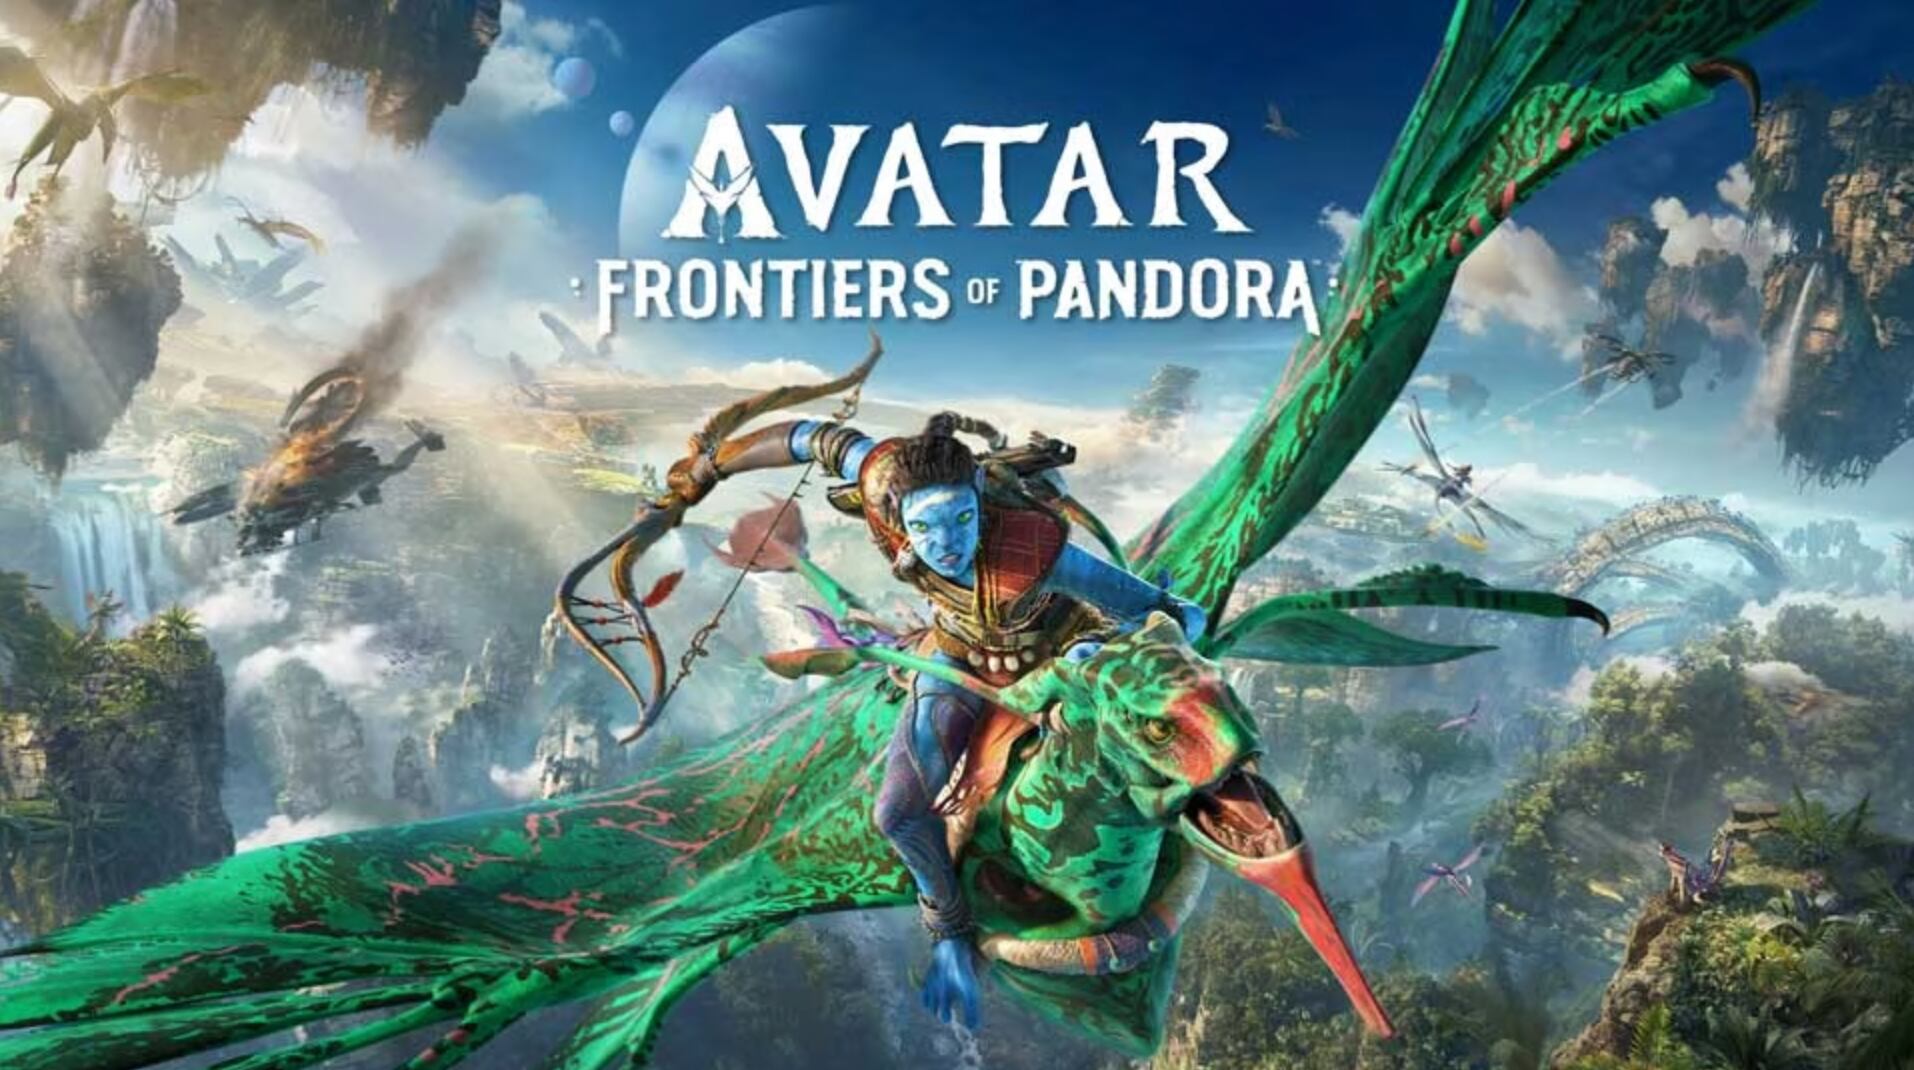 Avatars: Frontiers of Pandora